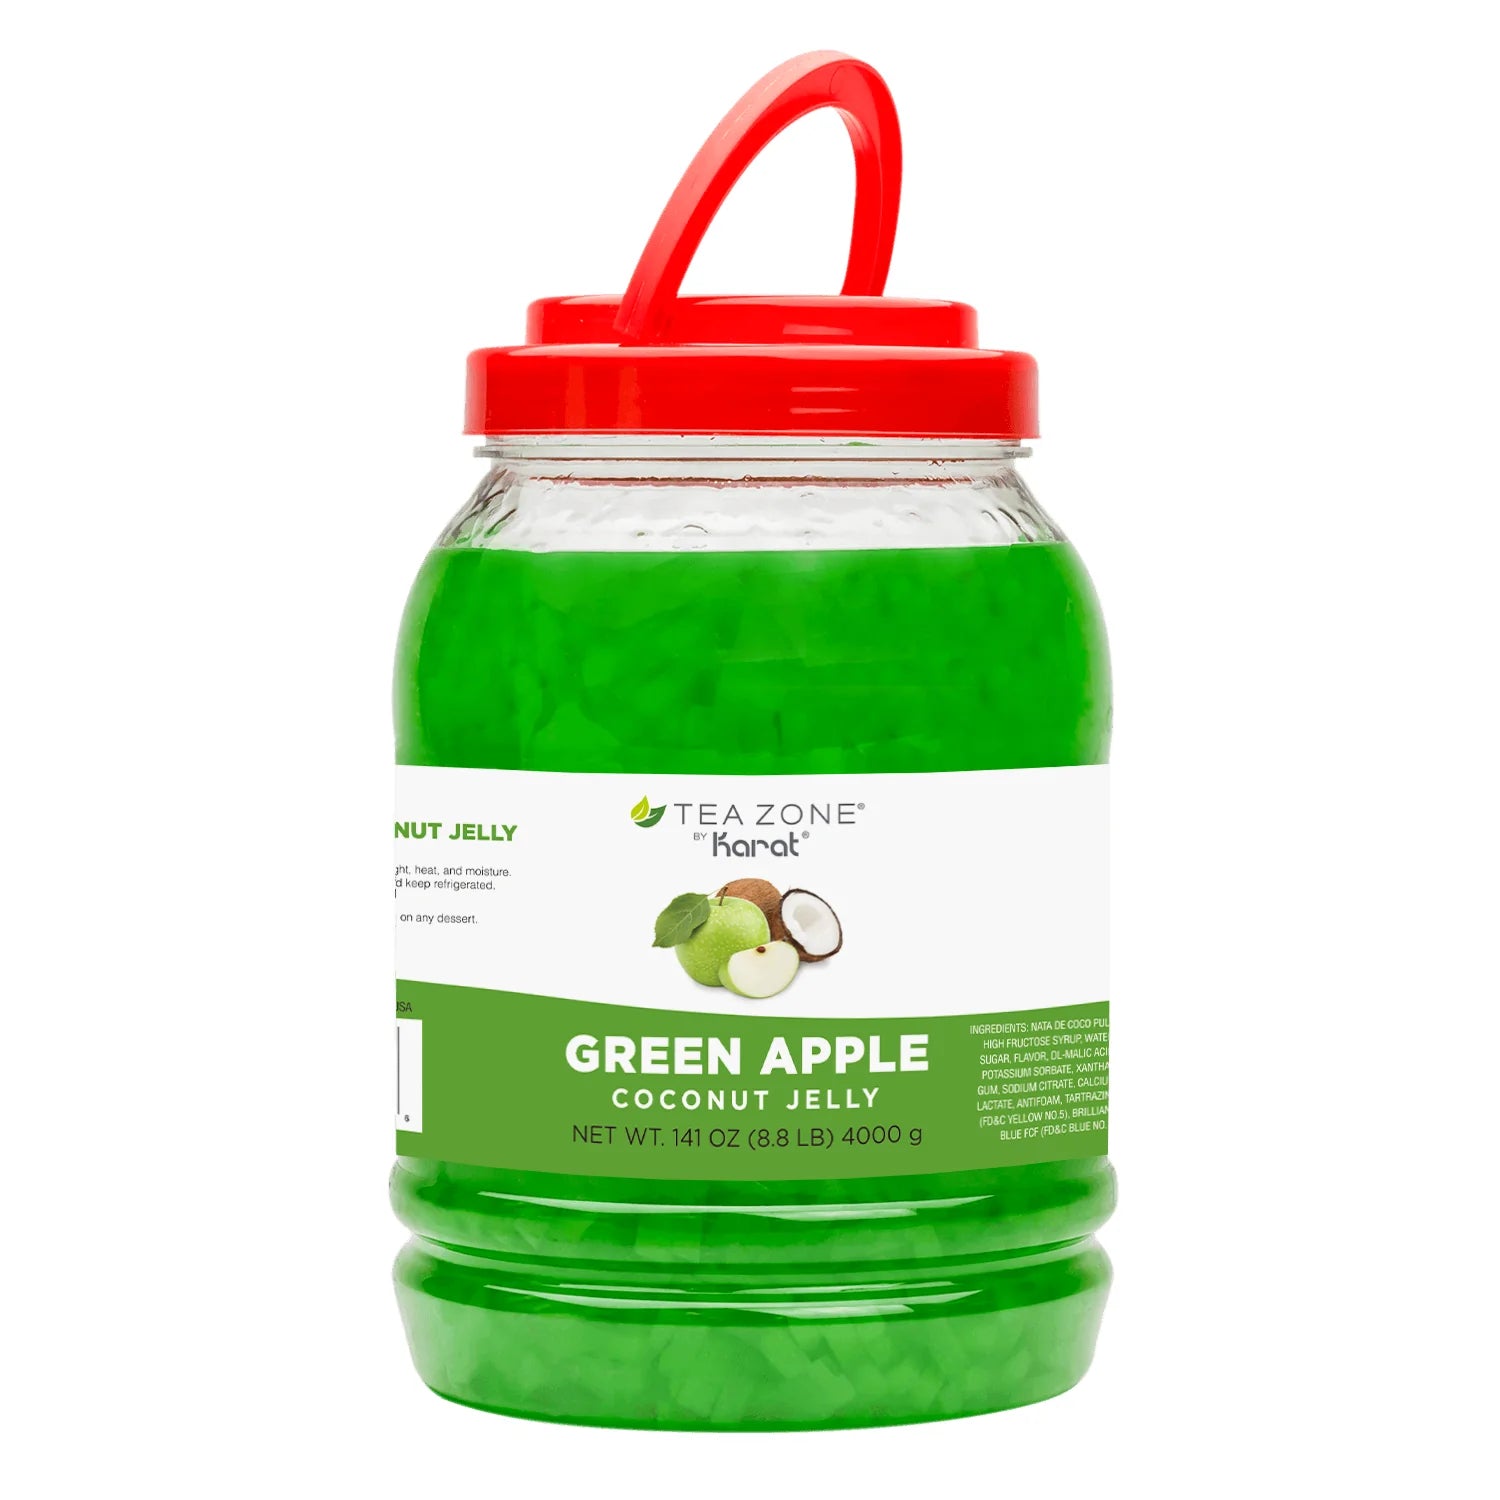 Tea Zone Green Apple Coconut Jelly - Jar (8.8 lbs)